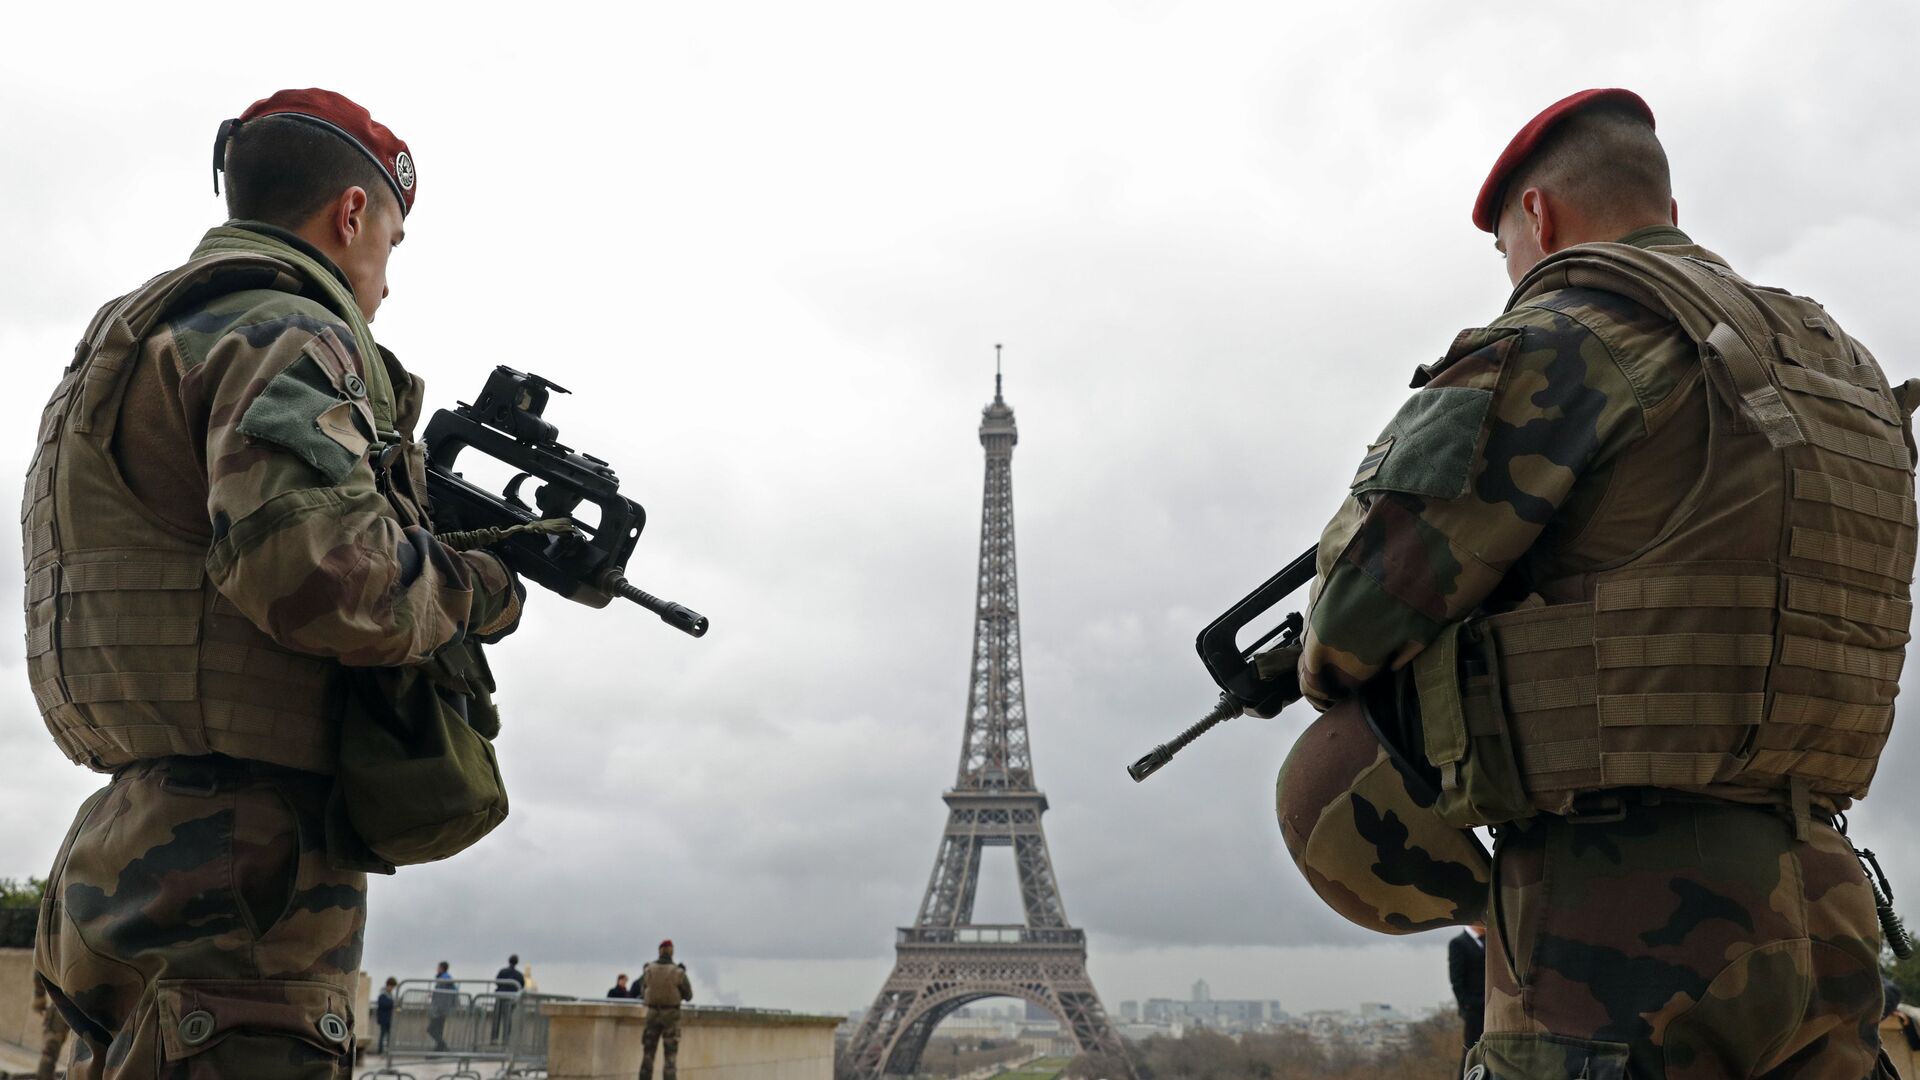 French army paratroopers patrol near the Eiffel tower in Paris. - Sputnik International, 1920, 10.05.2021